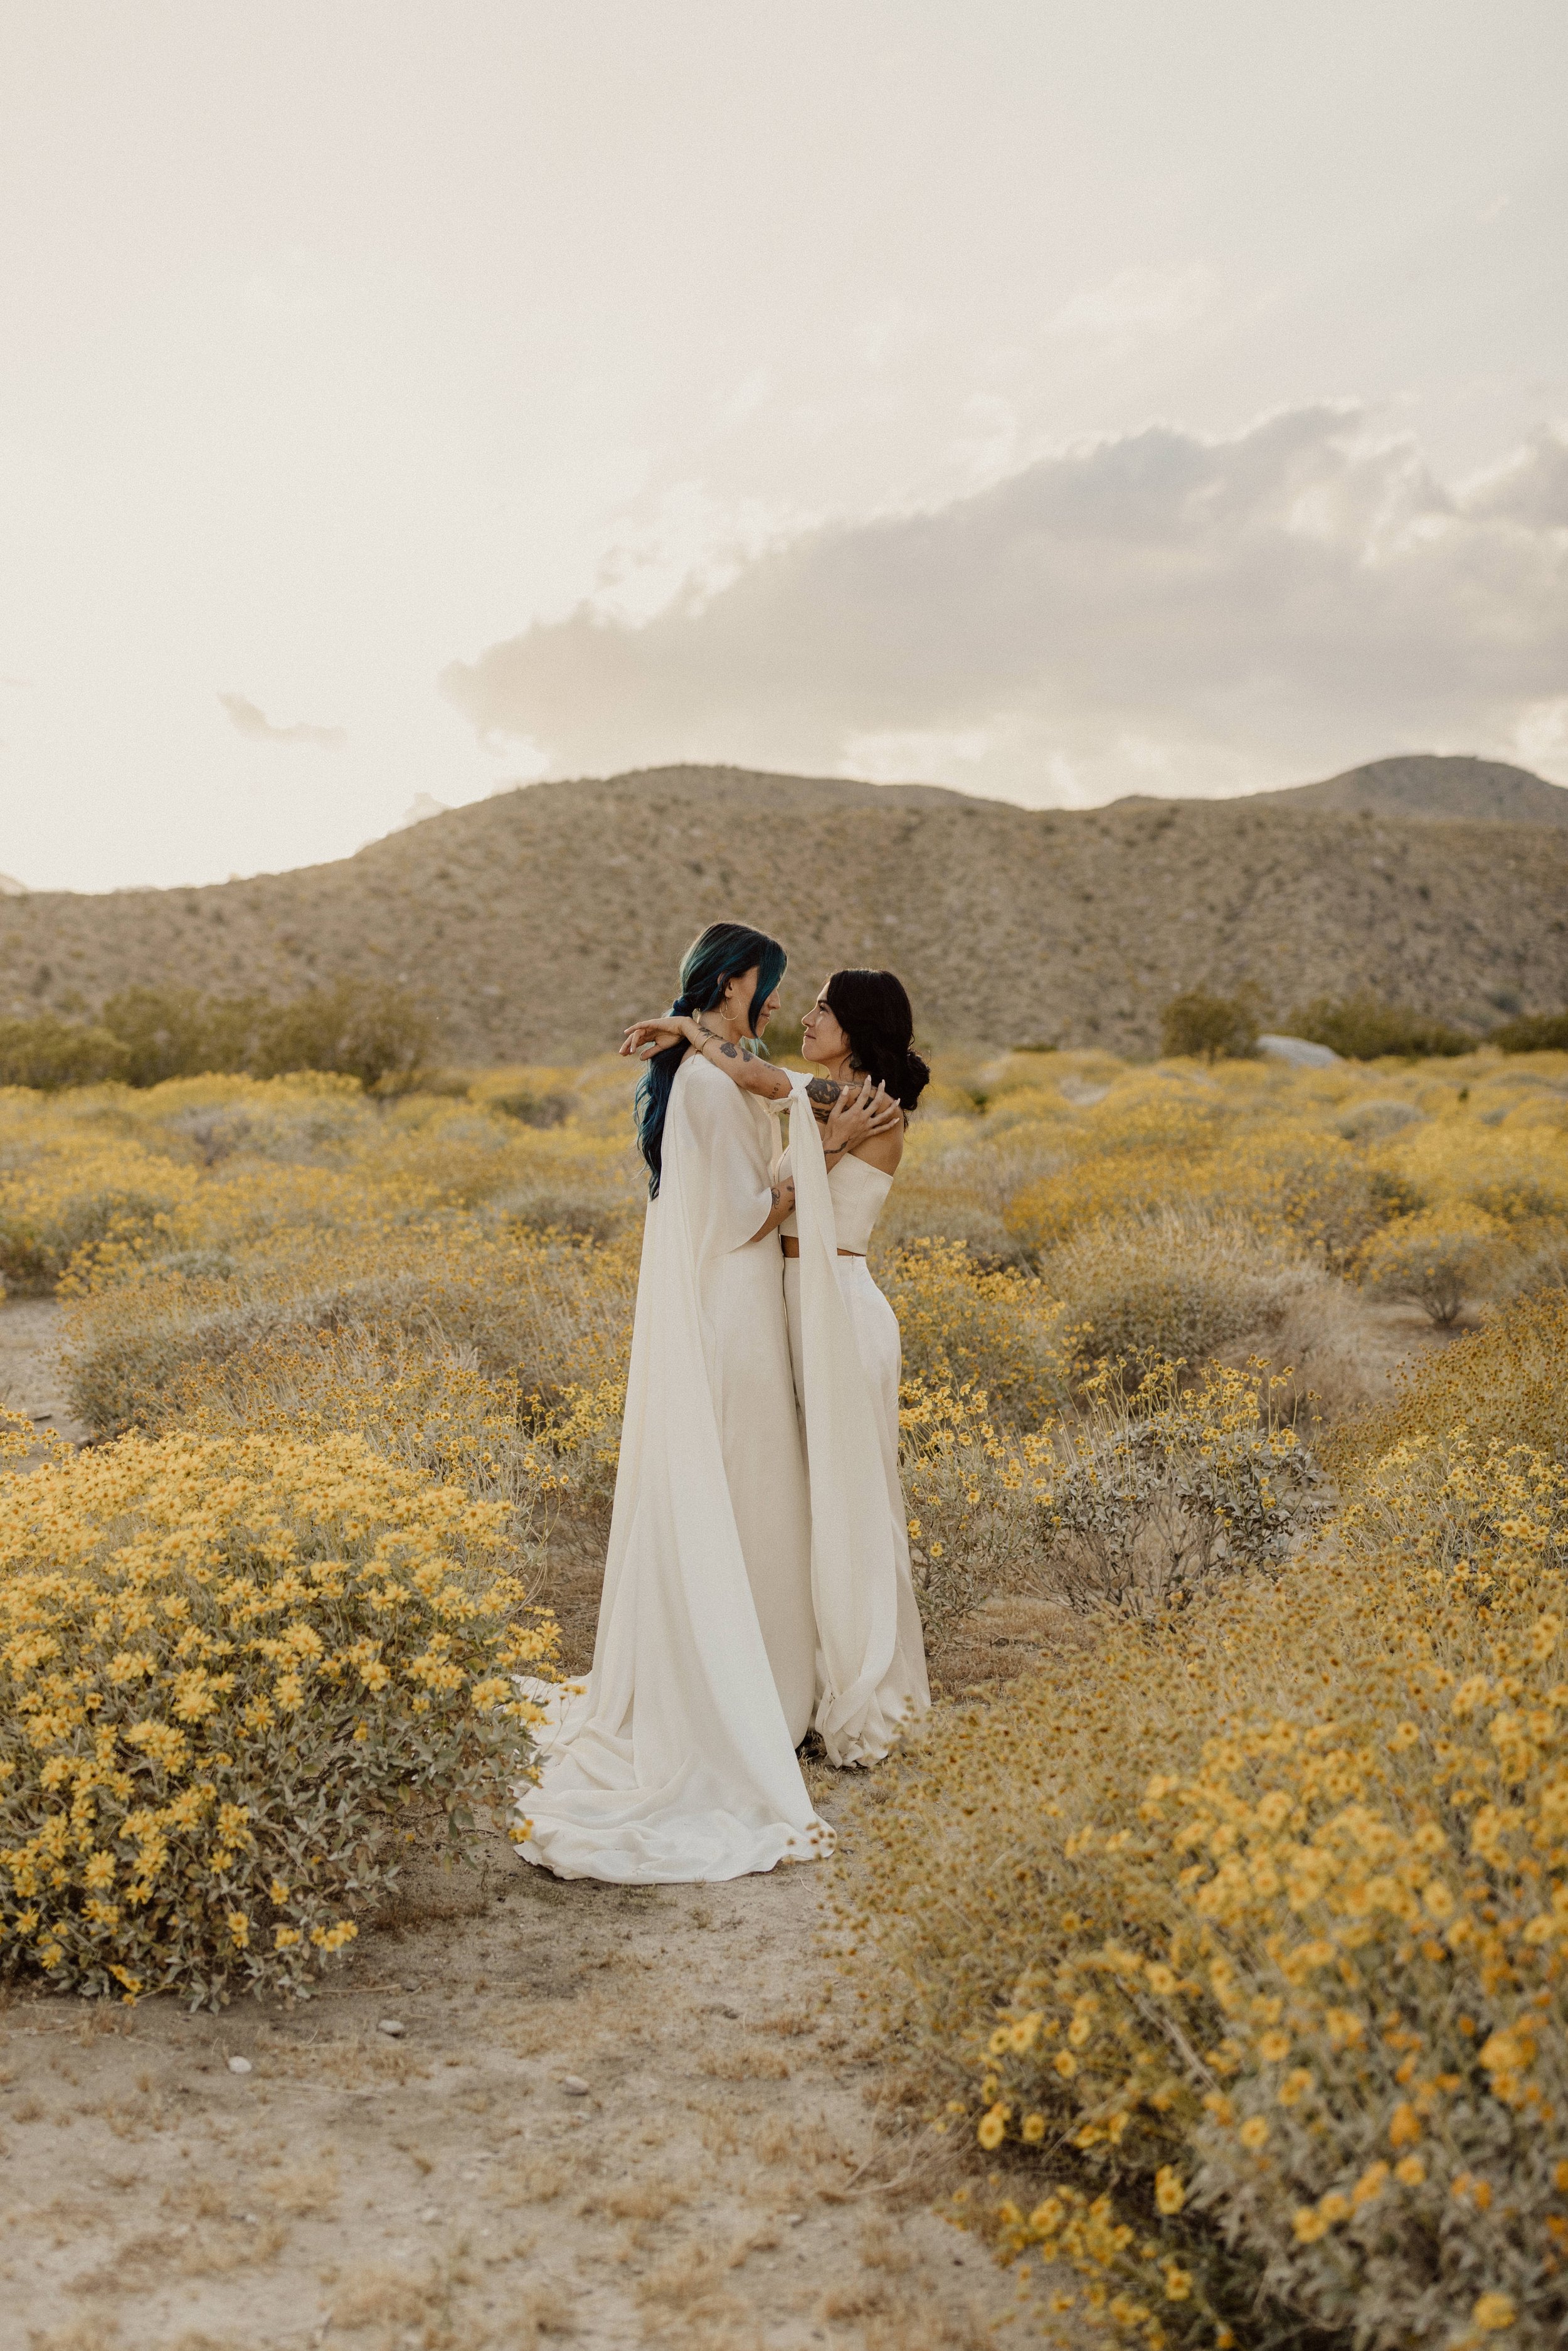  joshua tree california desert elopement minimal wedding look 